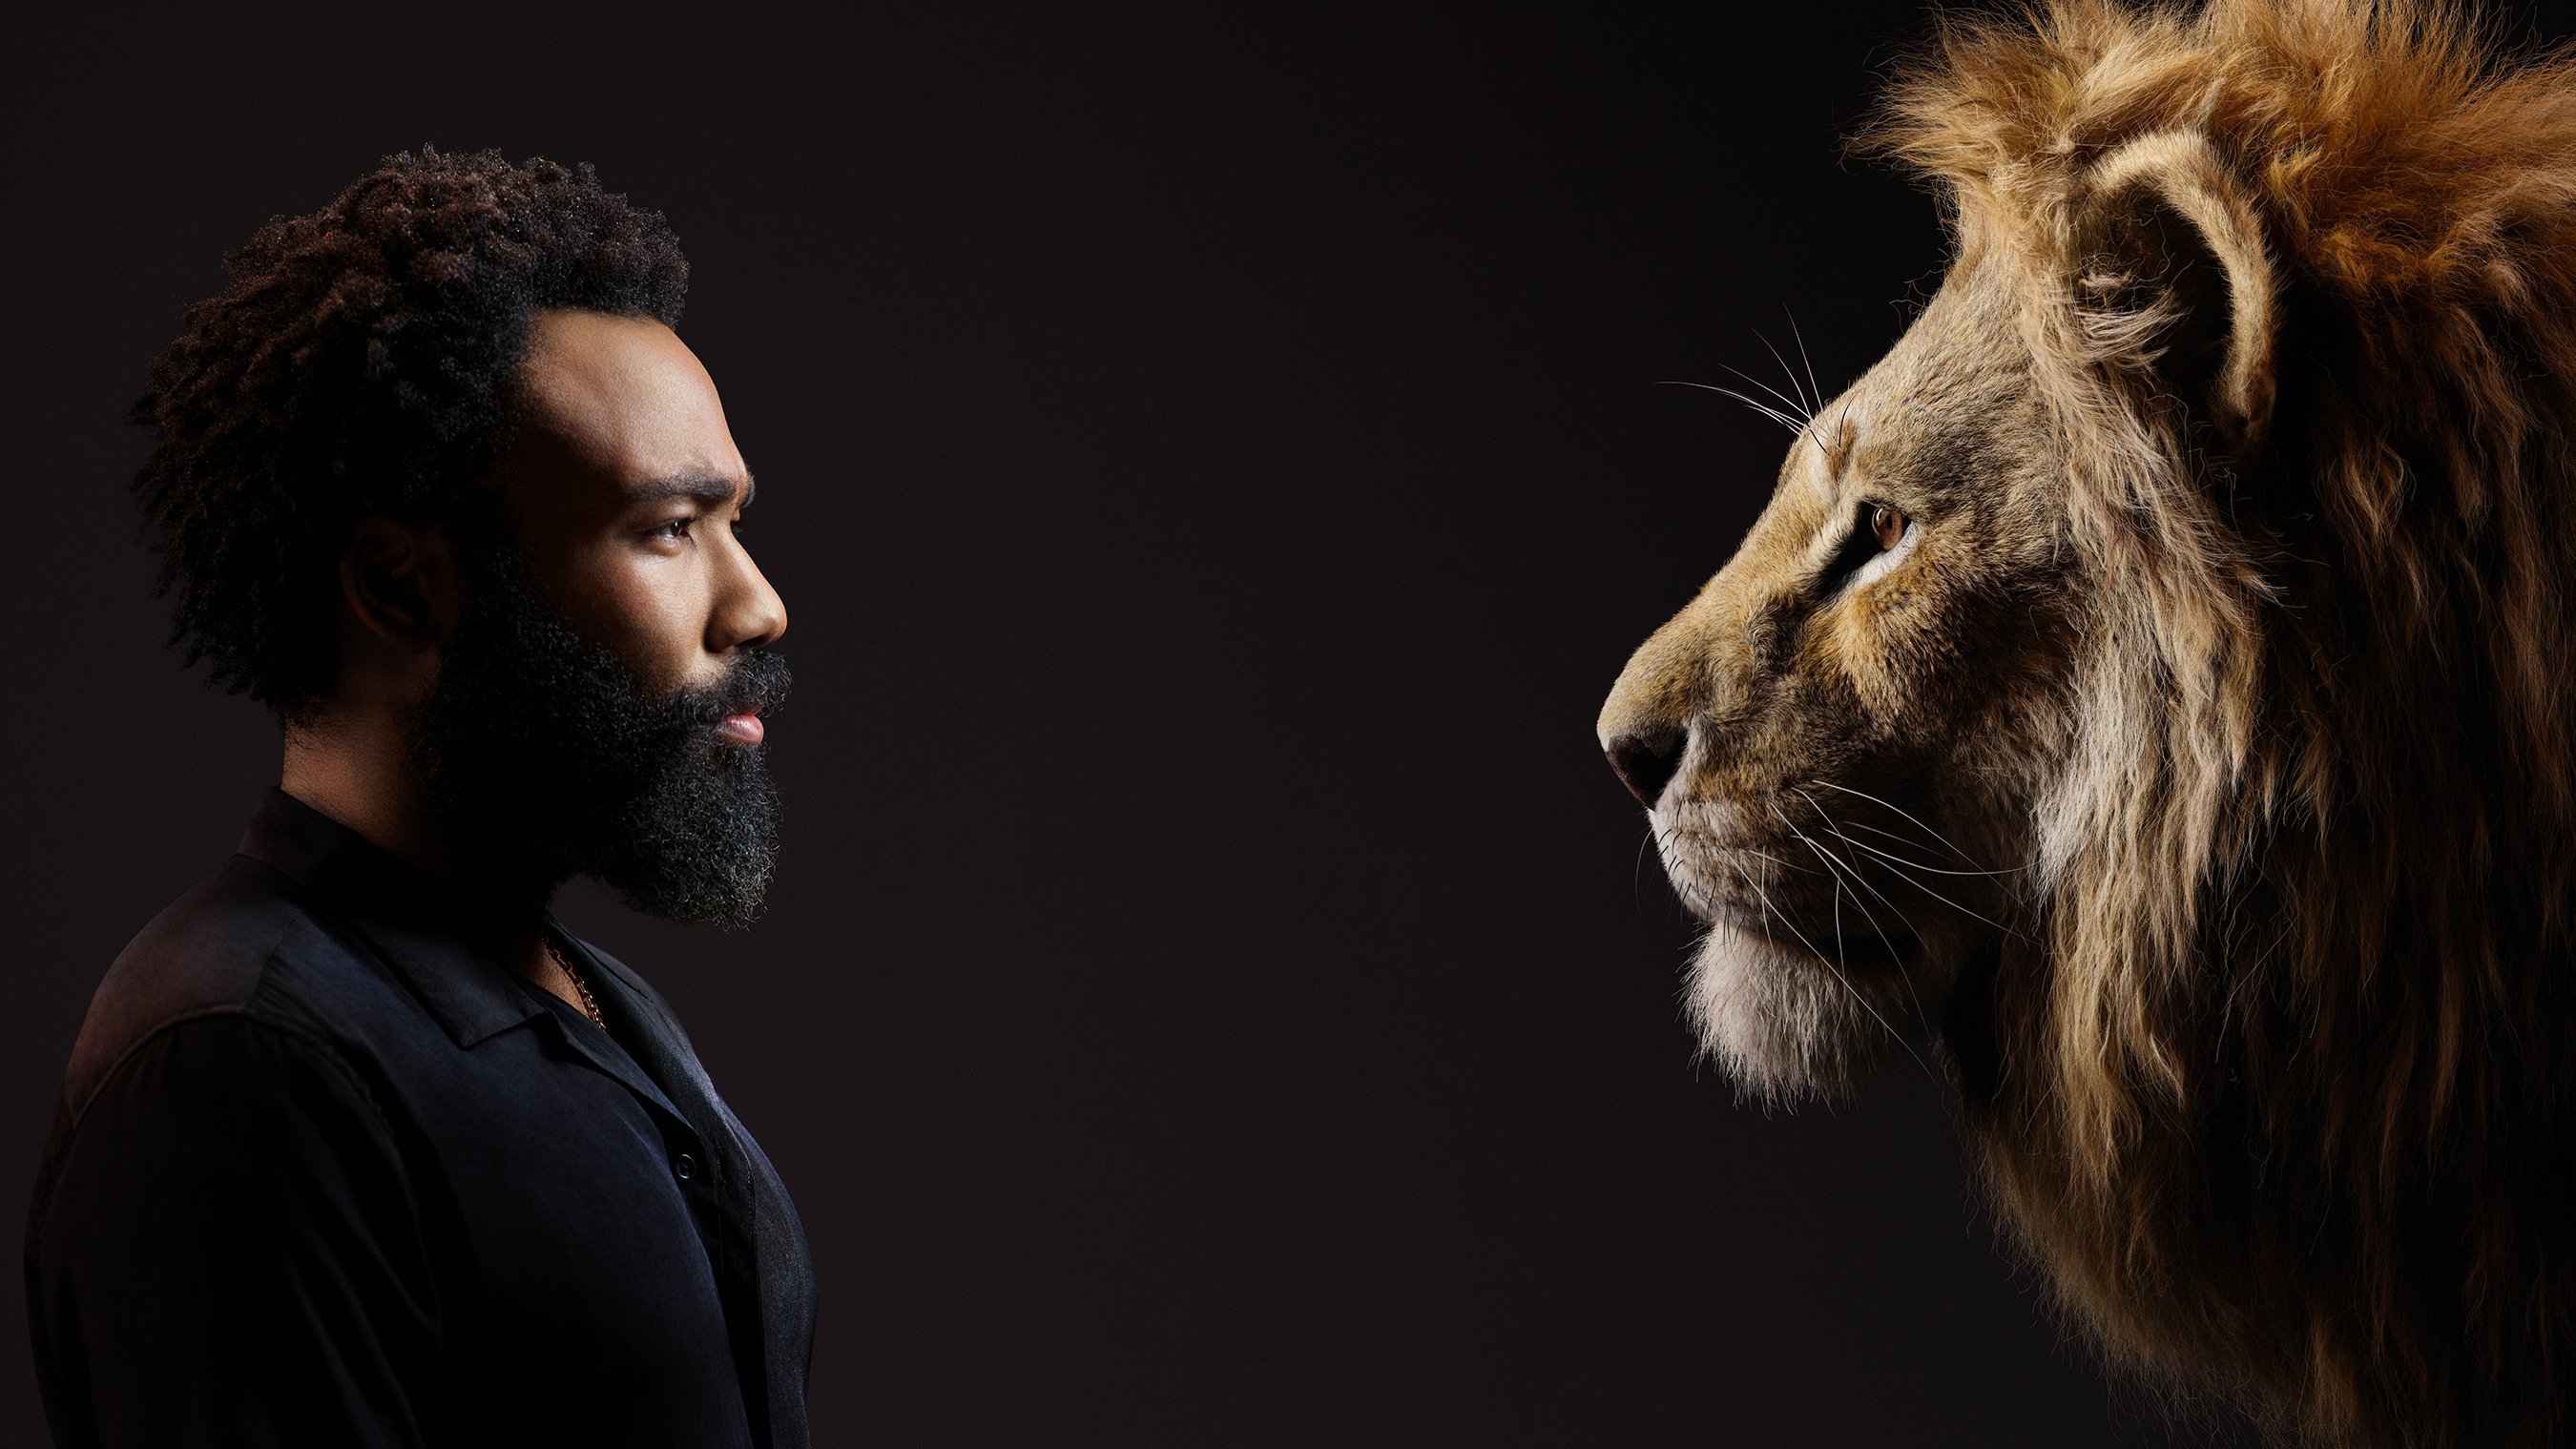 New Lion King Cast Posters Show Cast Alongside Animals - GameSpot